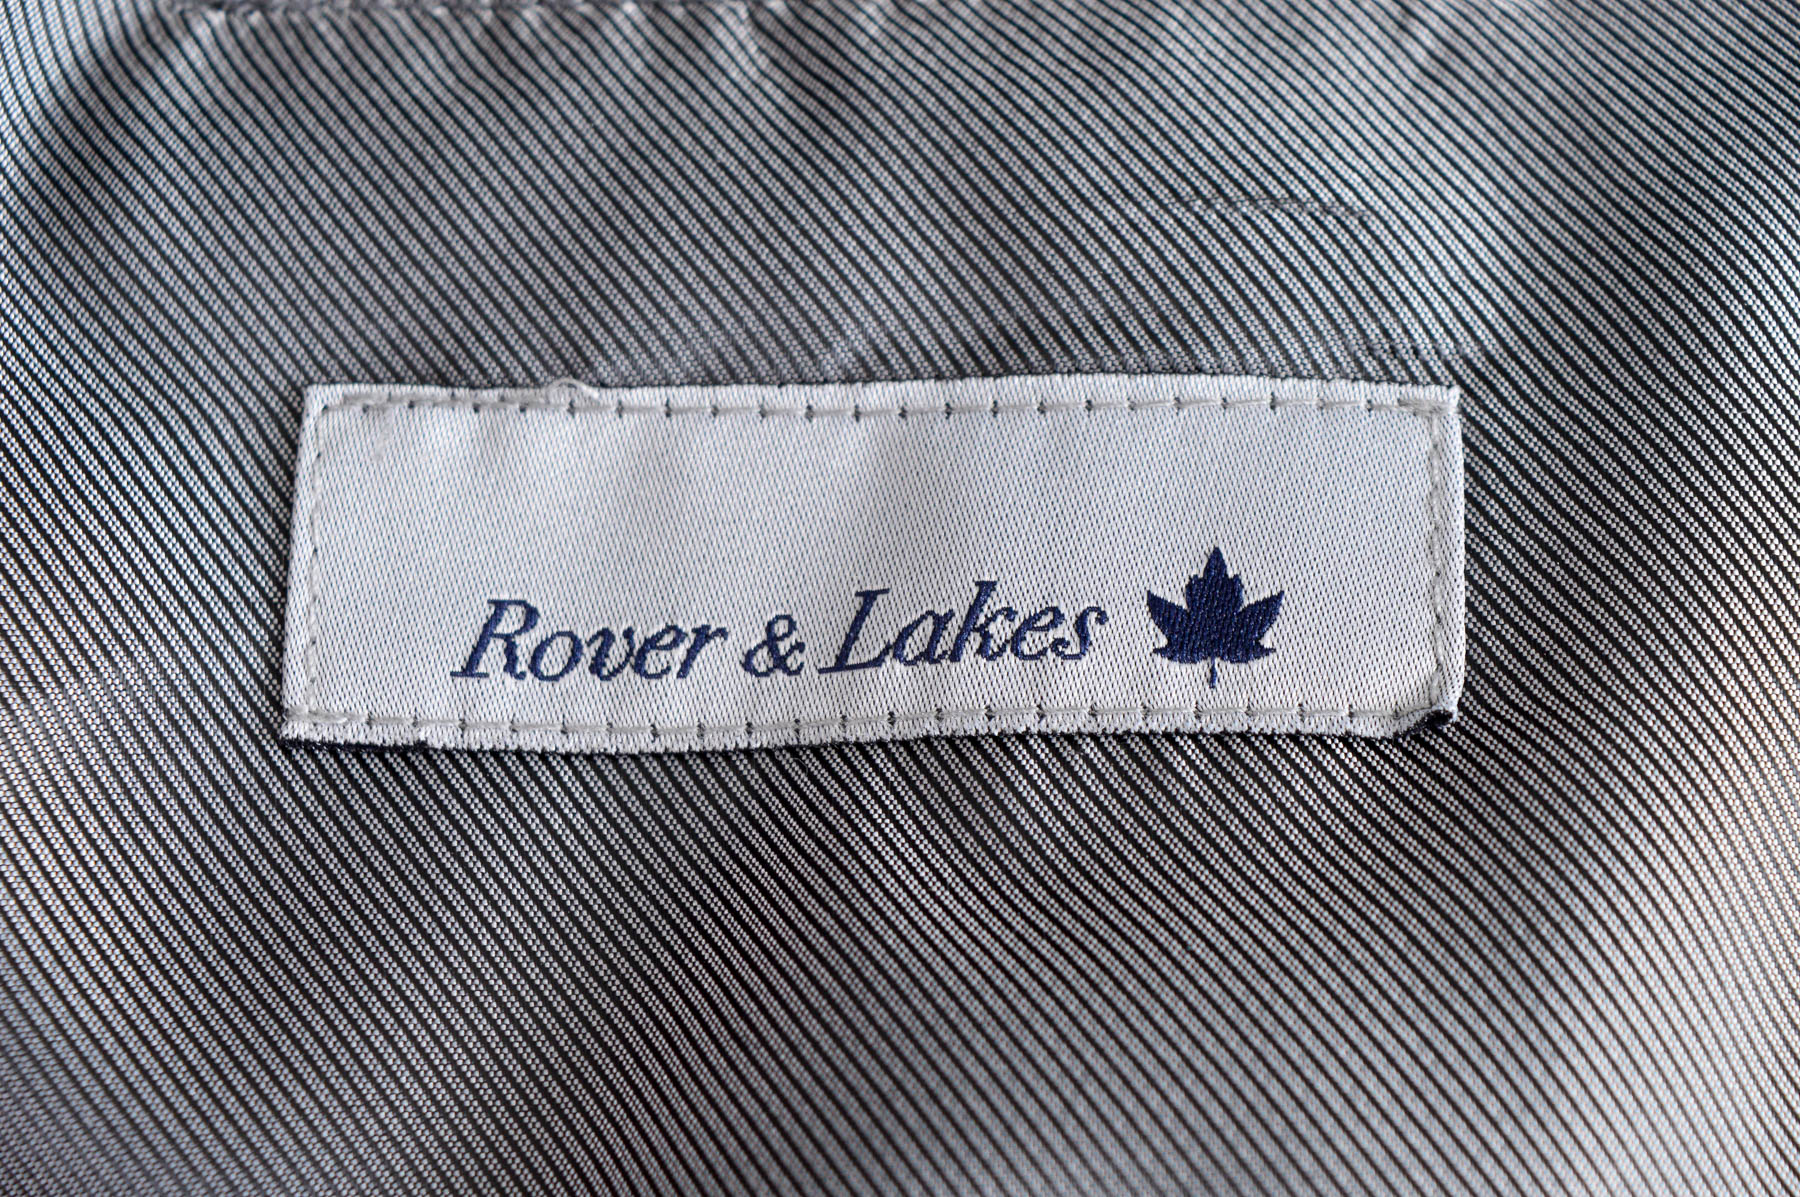 Мъжко сако - Rover & Lakes - 2